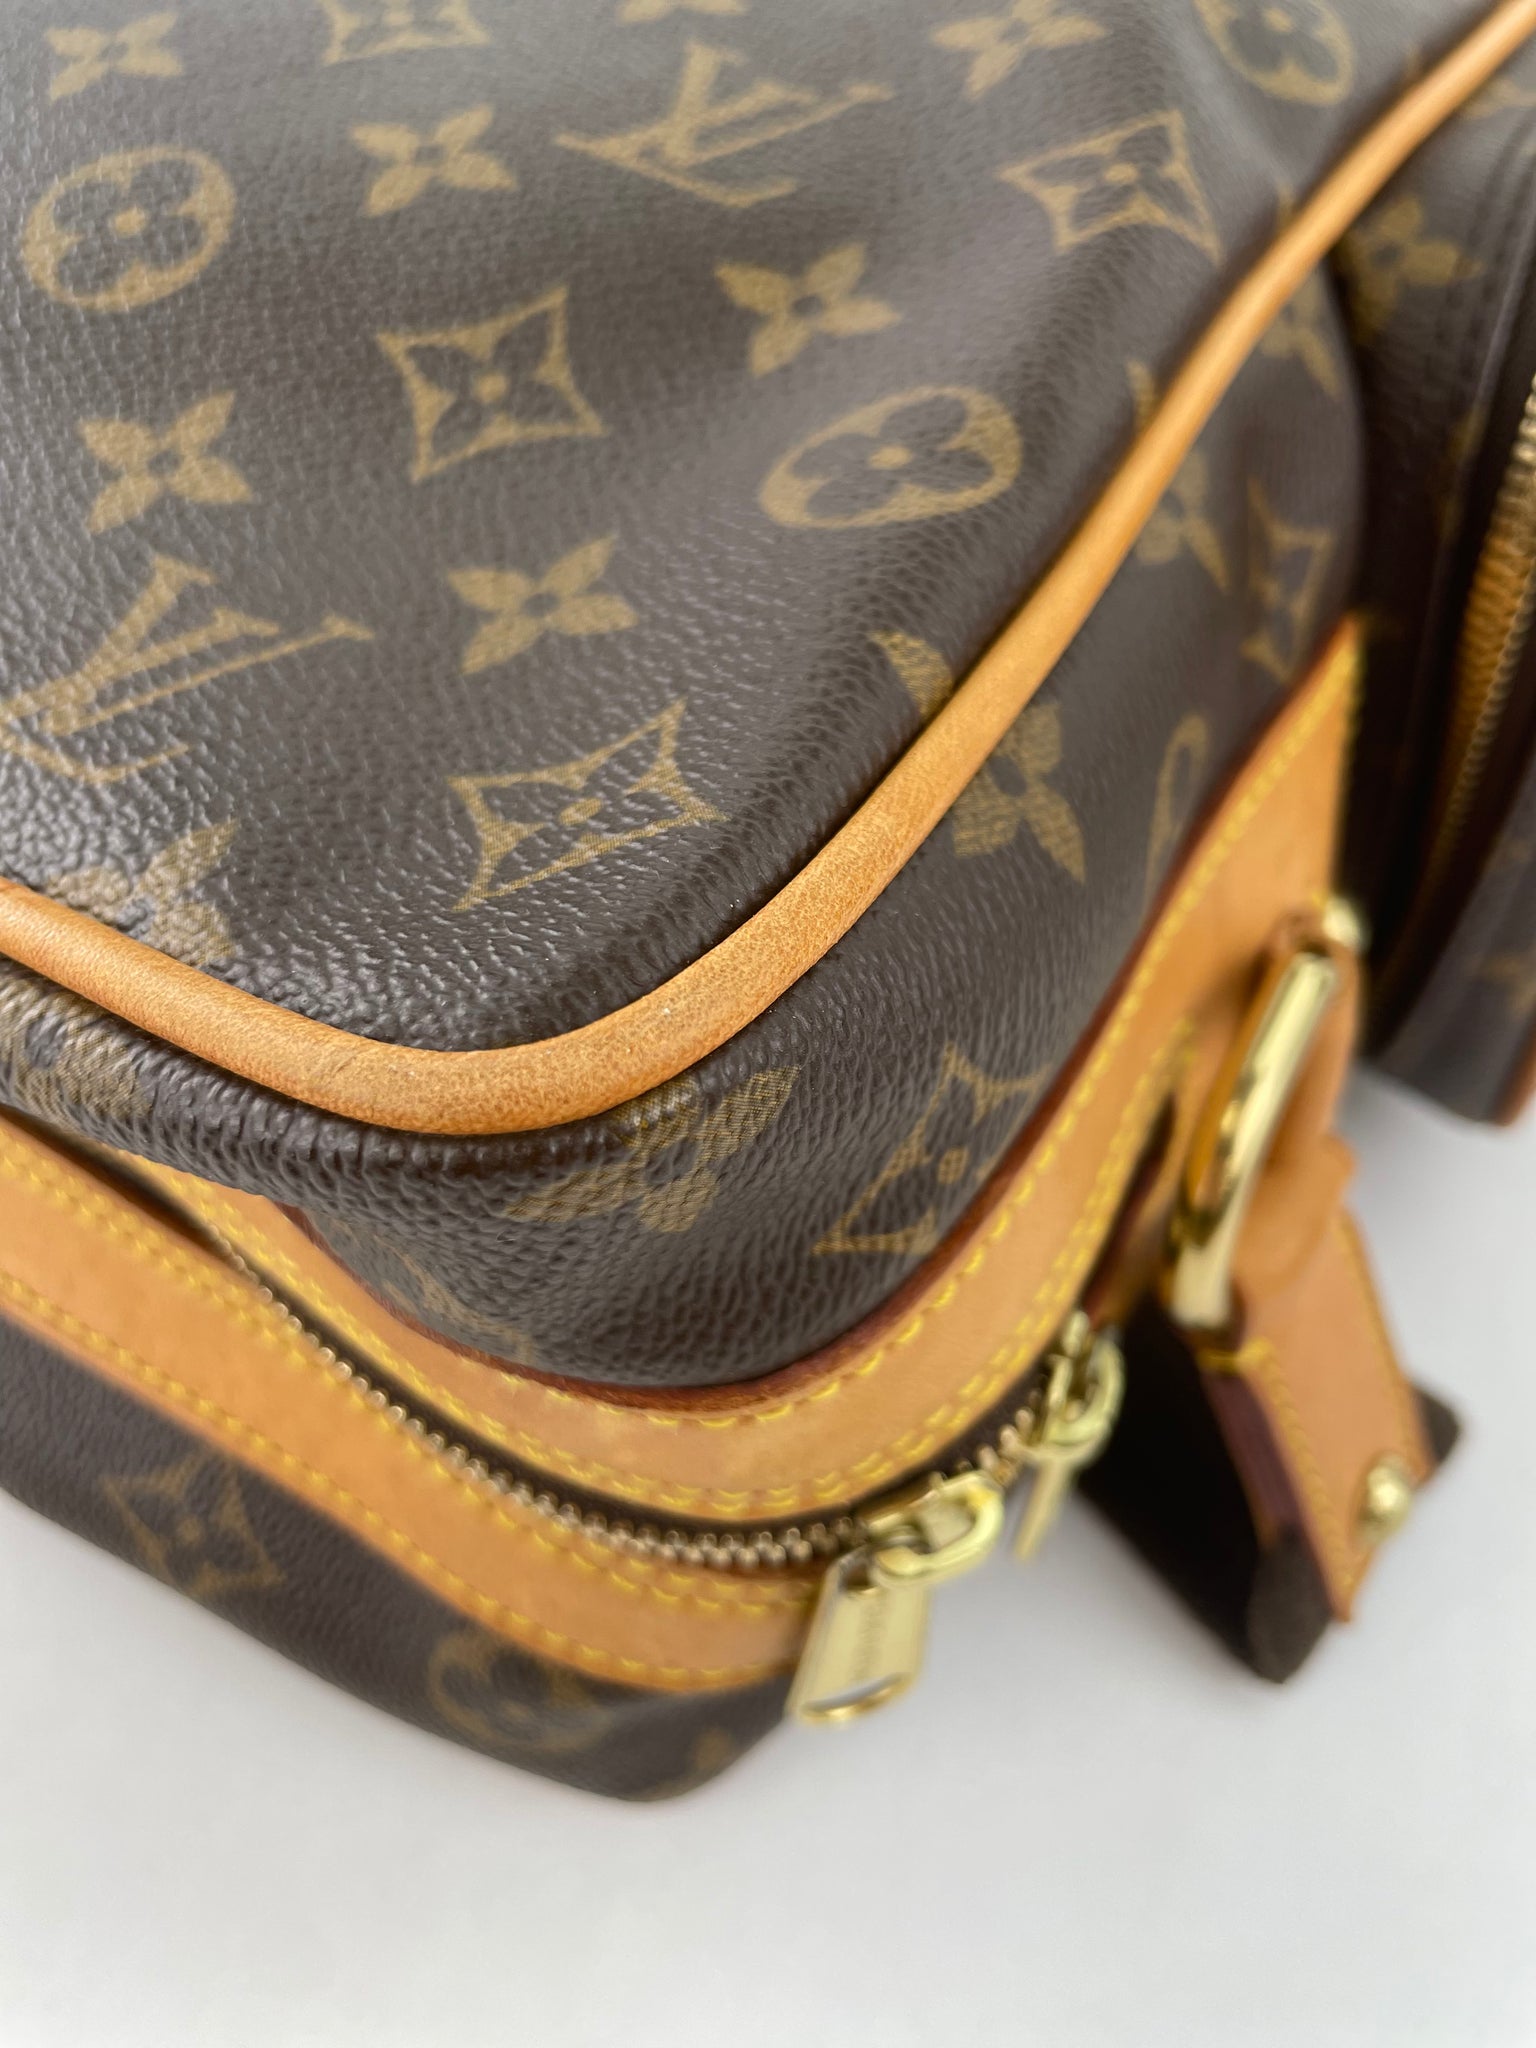 Louis Vuitton camera bag / messenger